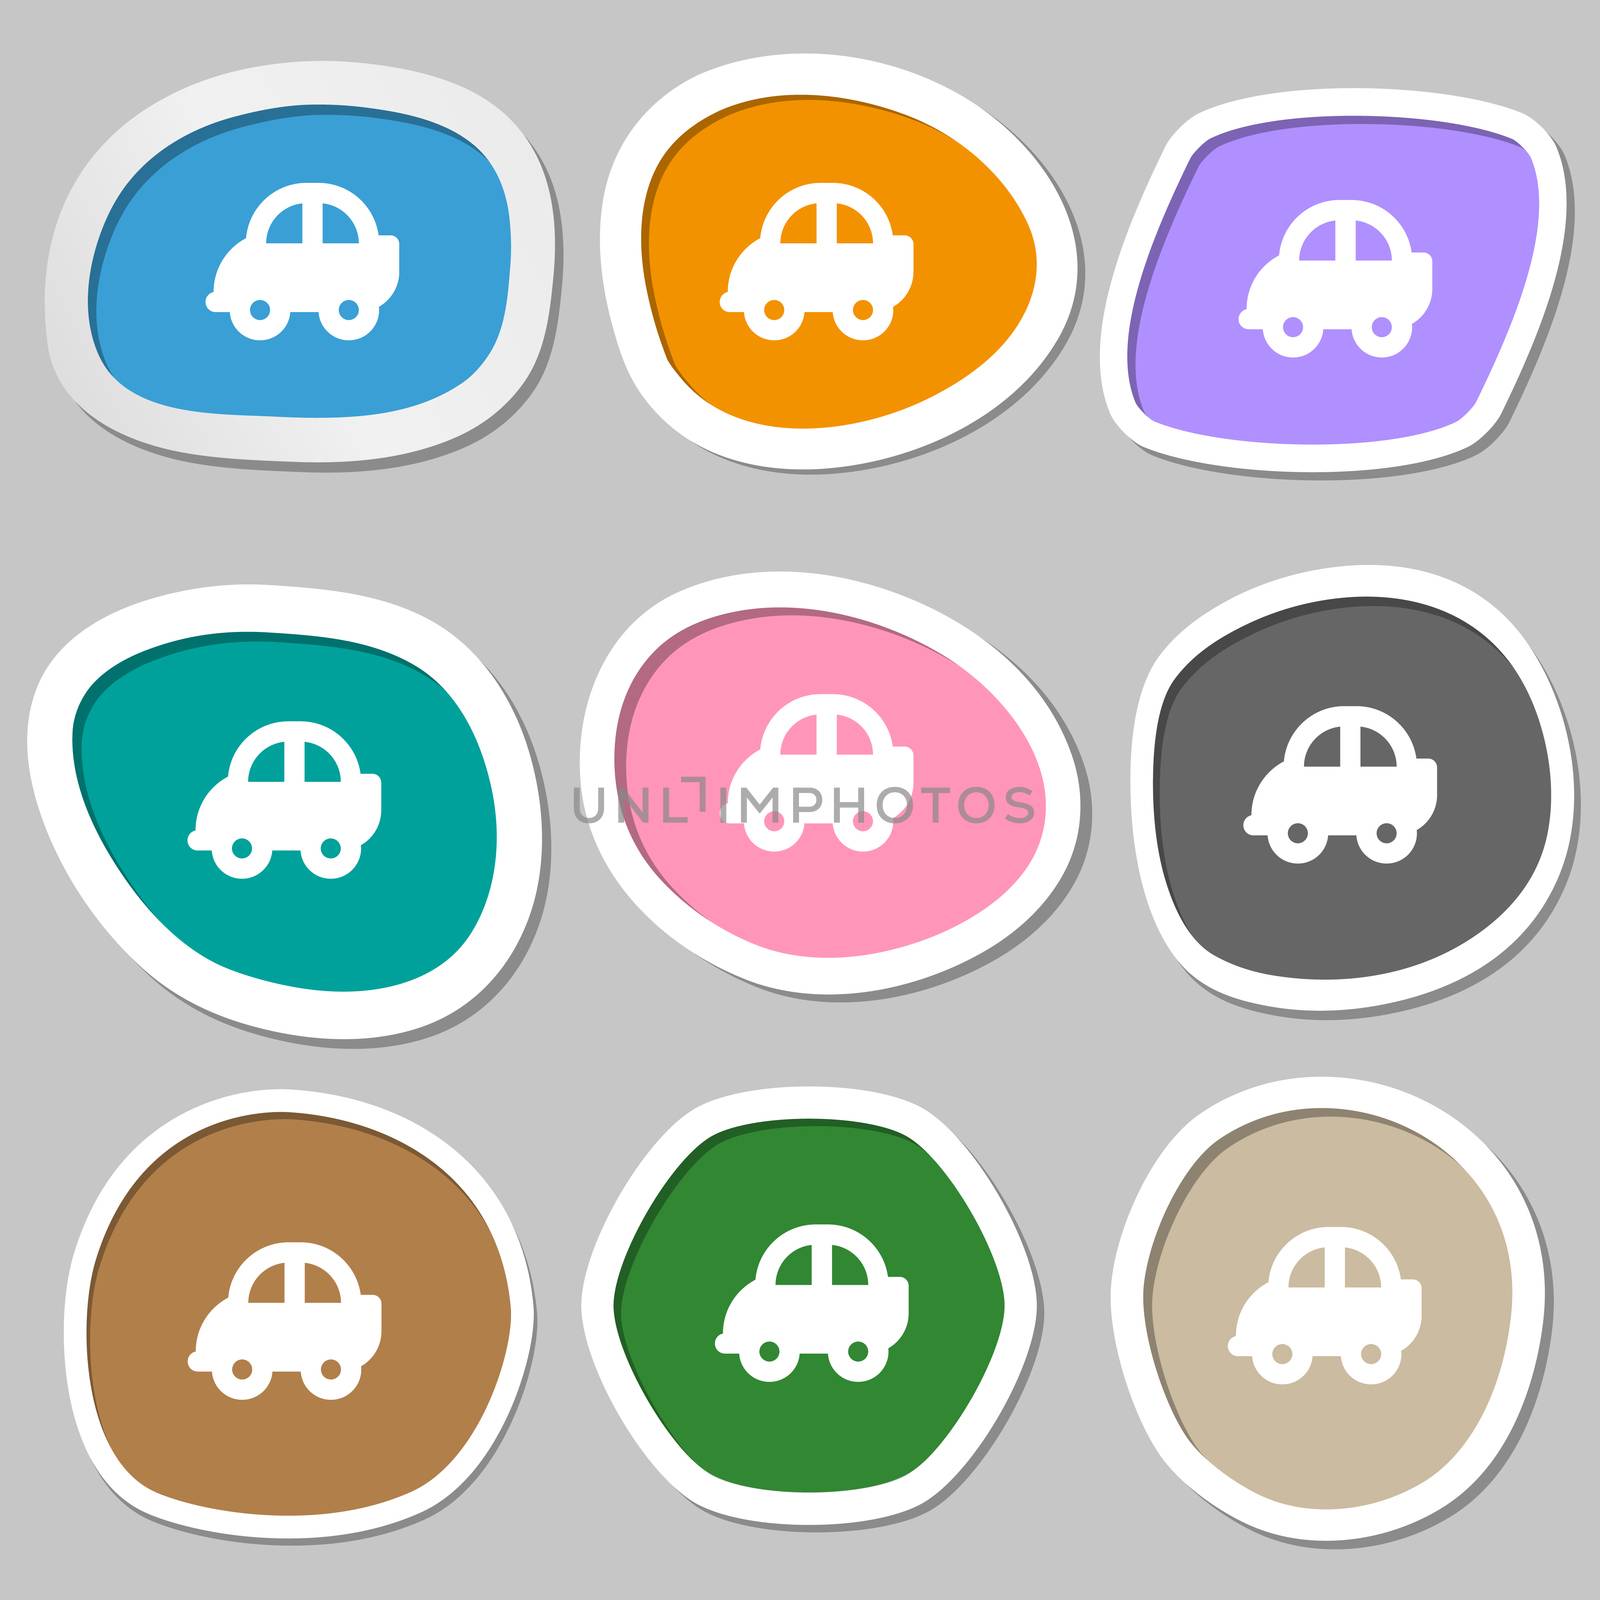 Auto icon symbols. Multicolored paper stickers.  by serhii_lohvyniuk